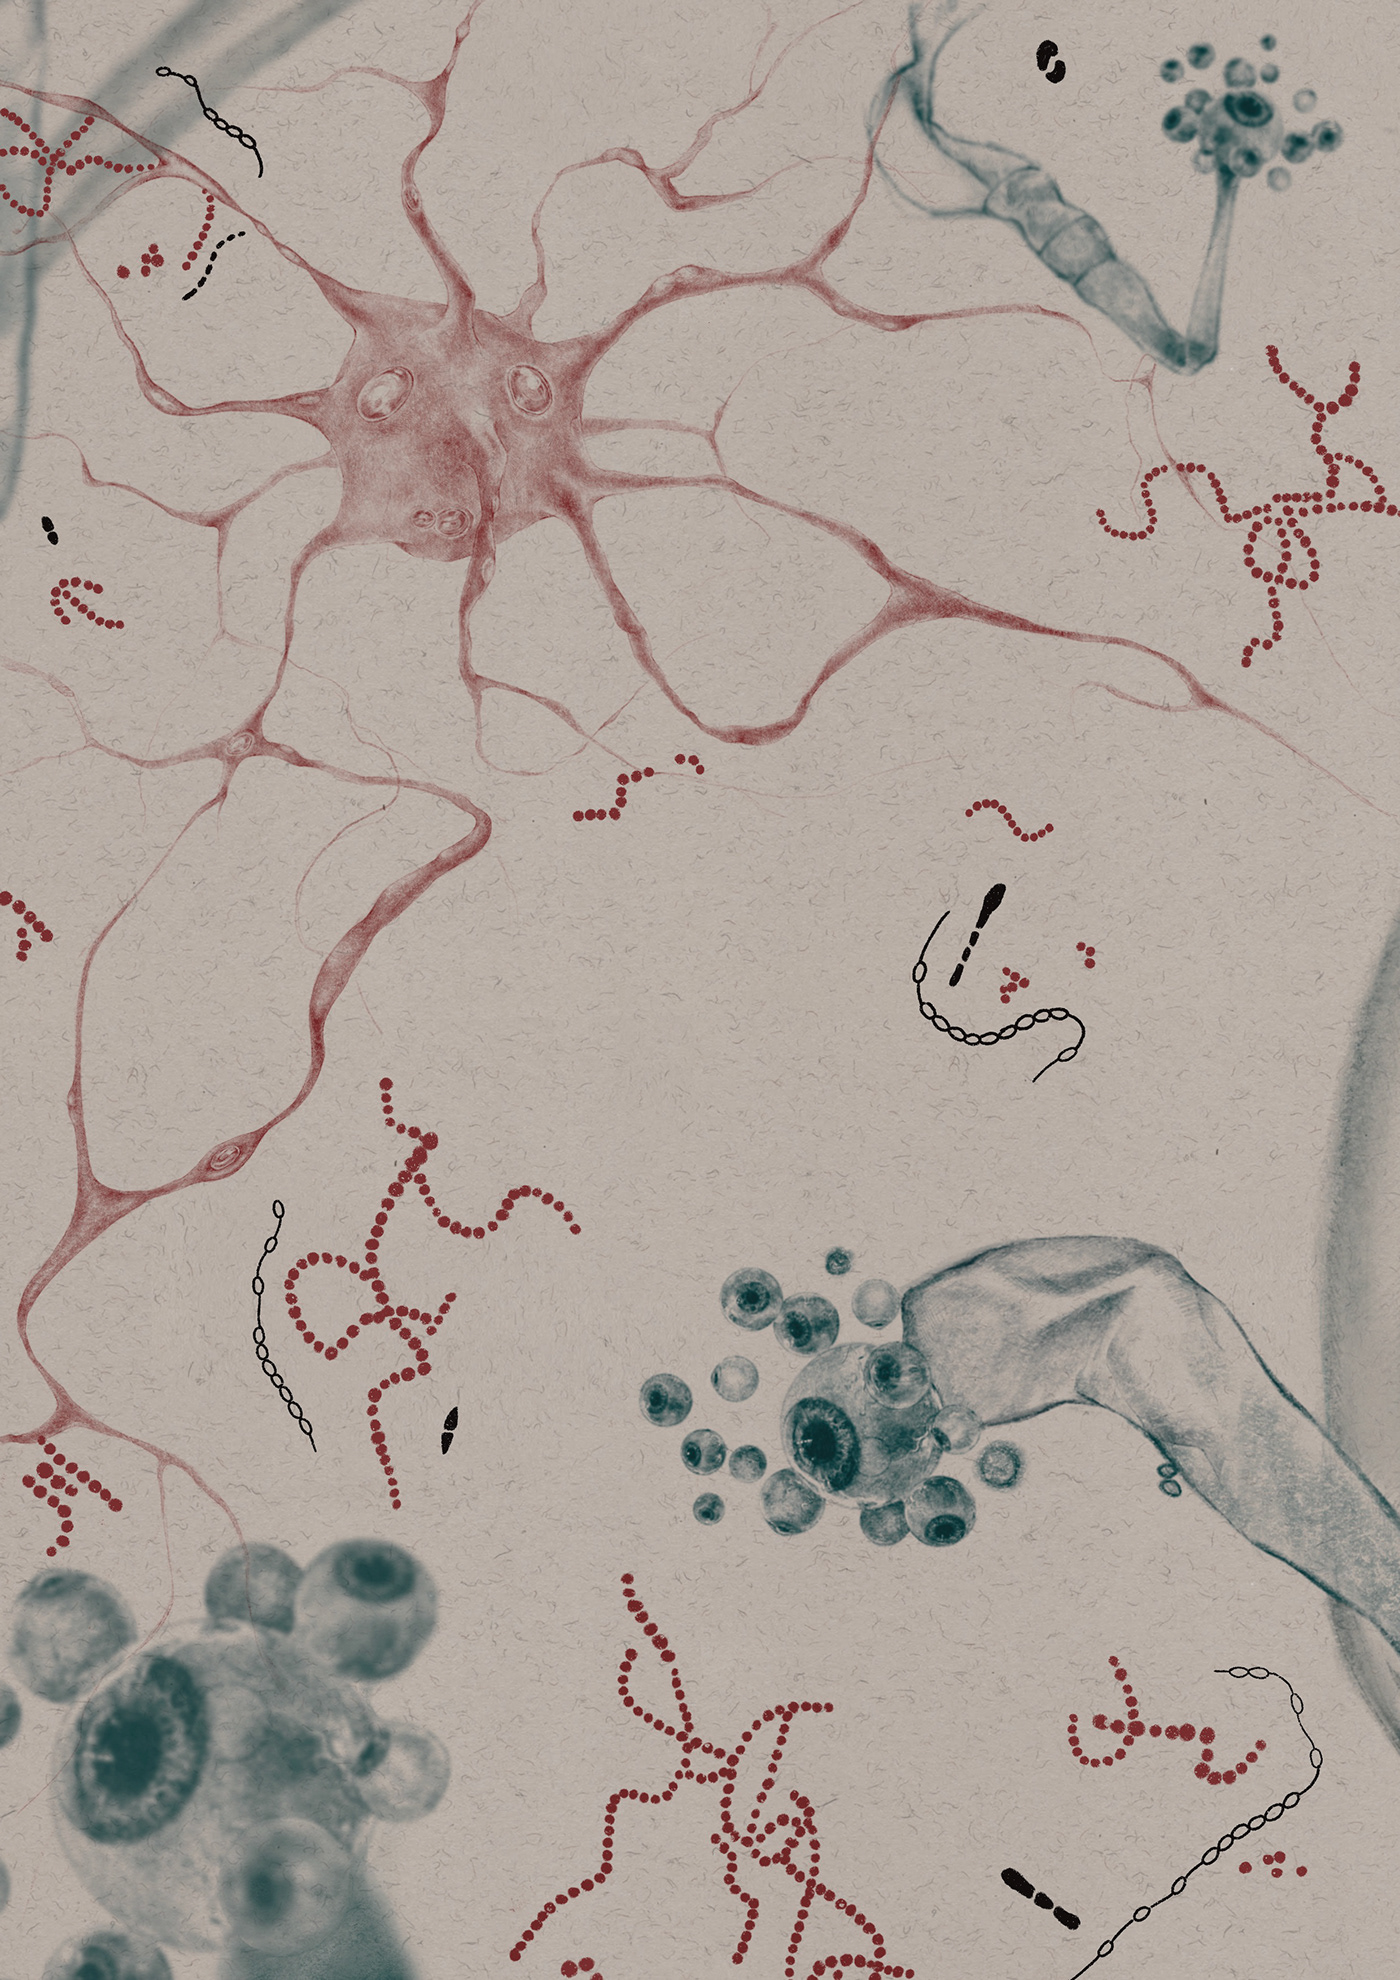 artwork digital illustration cells bioart microbiology Bacteria